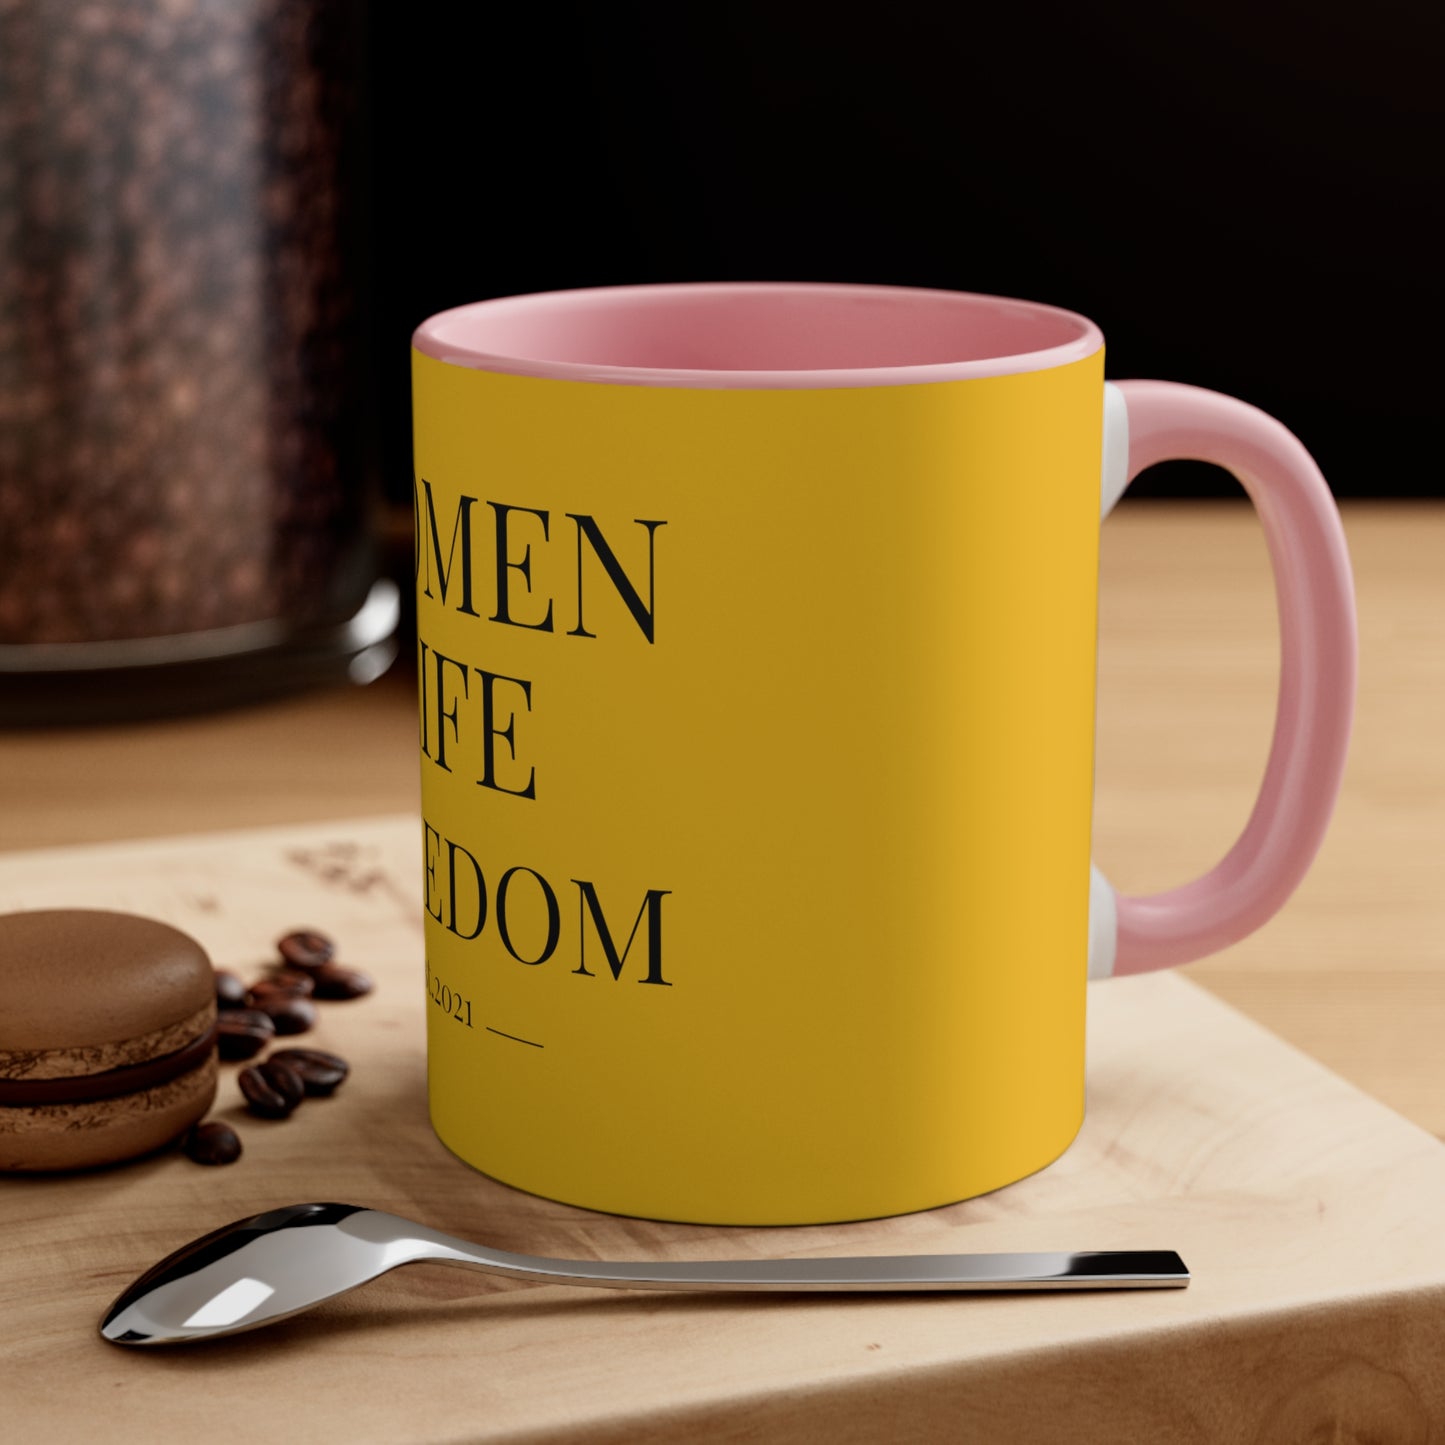 Women Life Freedom - Accent Coffee Mug, 11oz